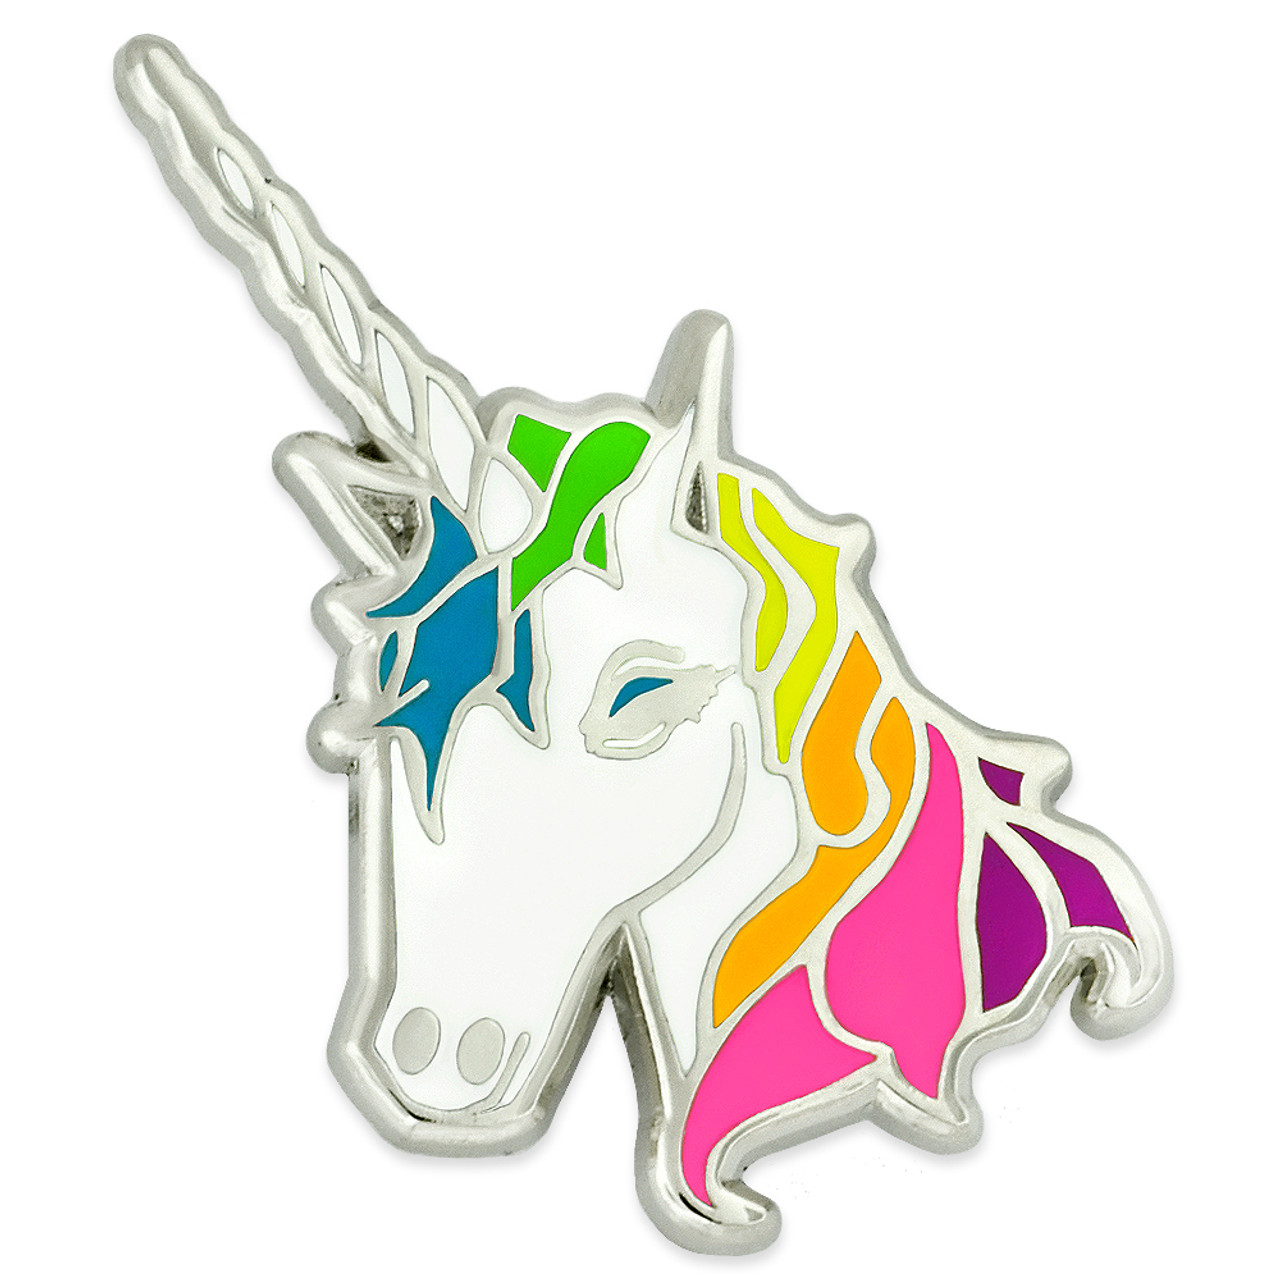 myeuphoria Brooch Pins-Enamel Unicorn Brooches Fashion Animal Horse Brooch Pin Elegant Party Coat Gift 